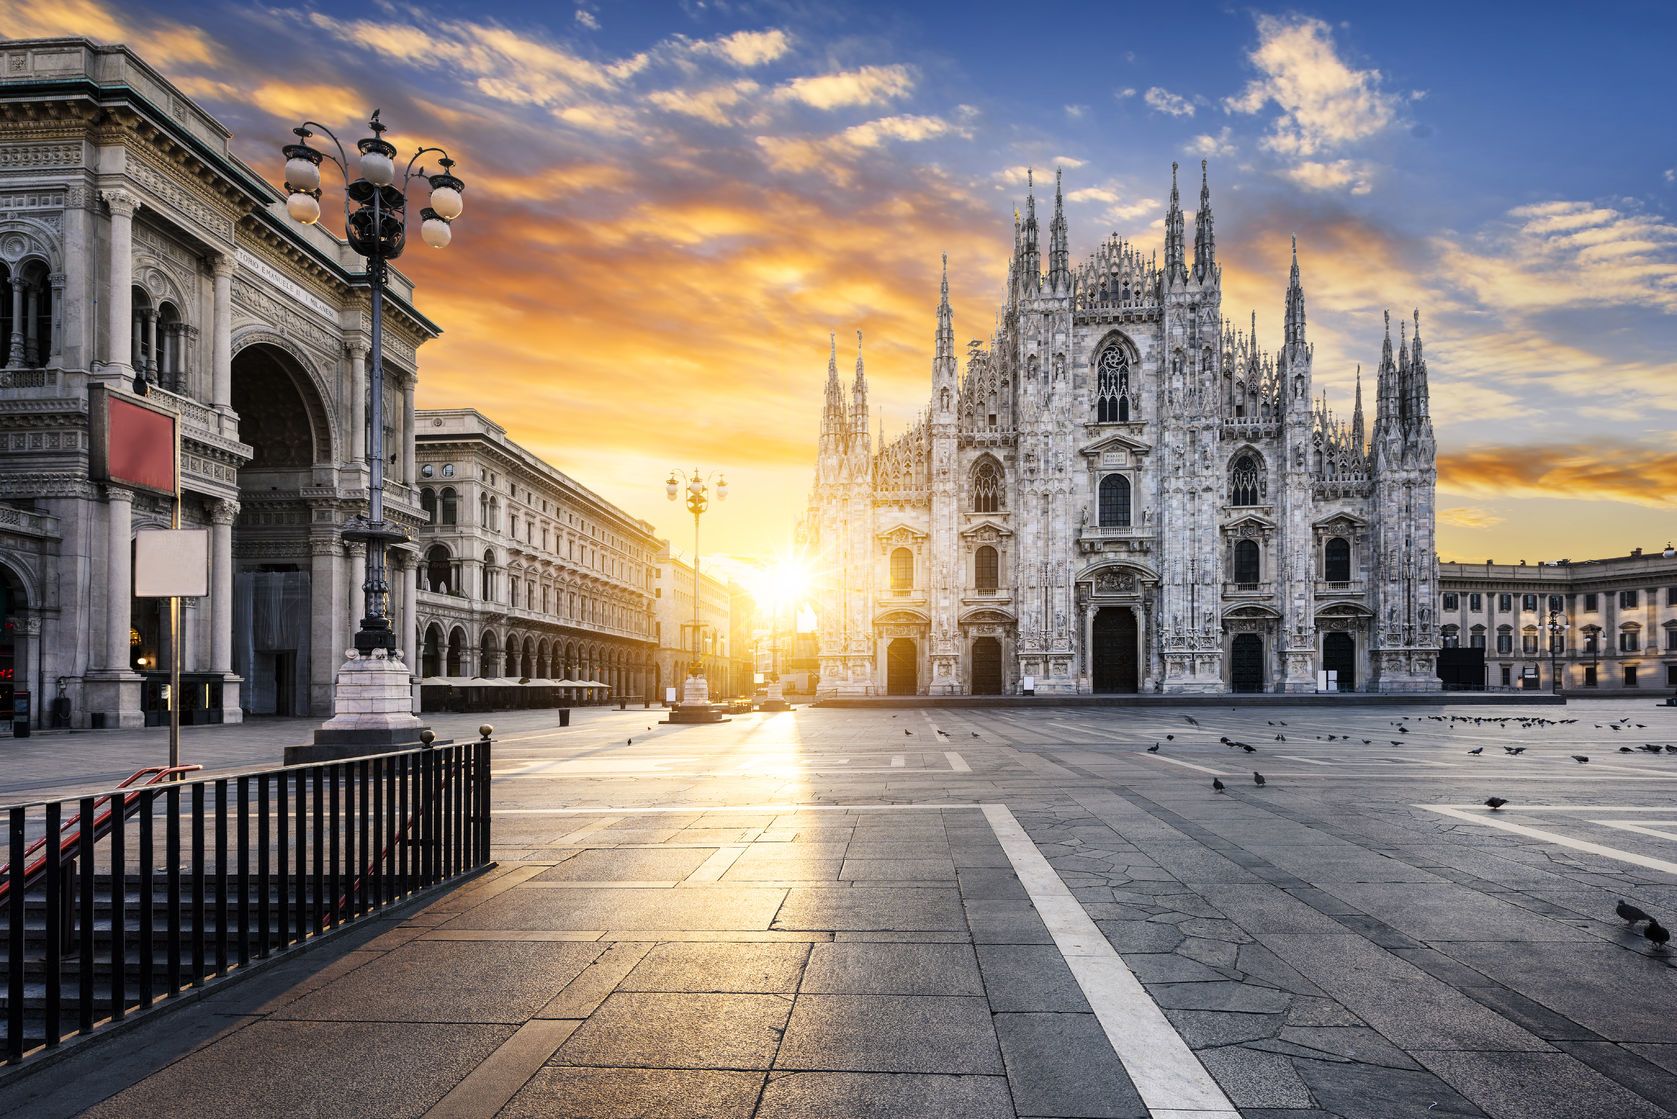 Duomo v Miláně při východu slunce | ventdusud/123RF.com